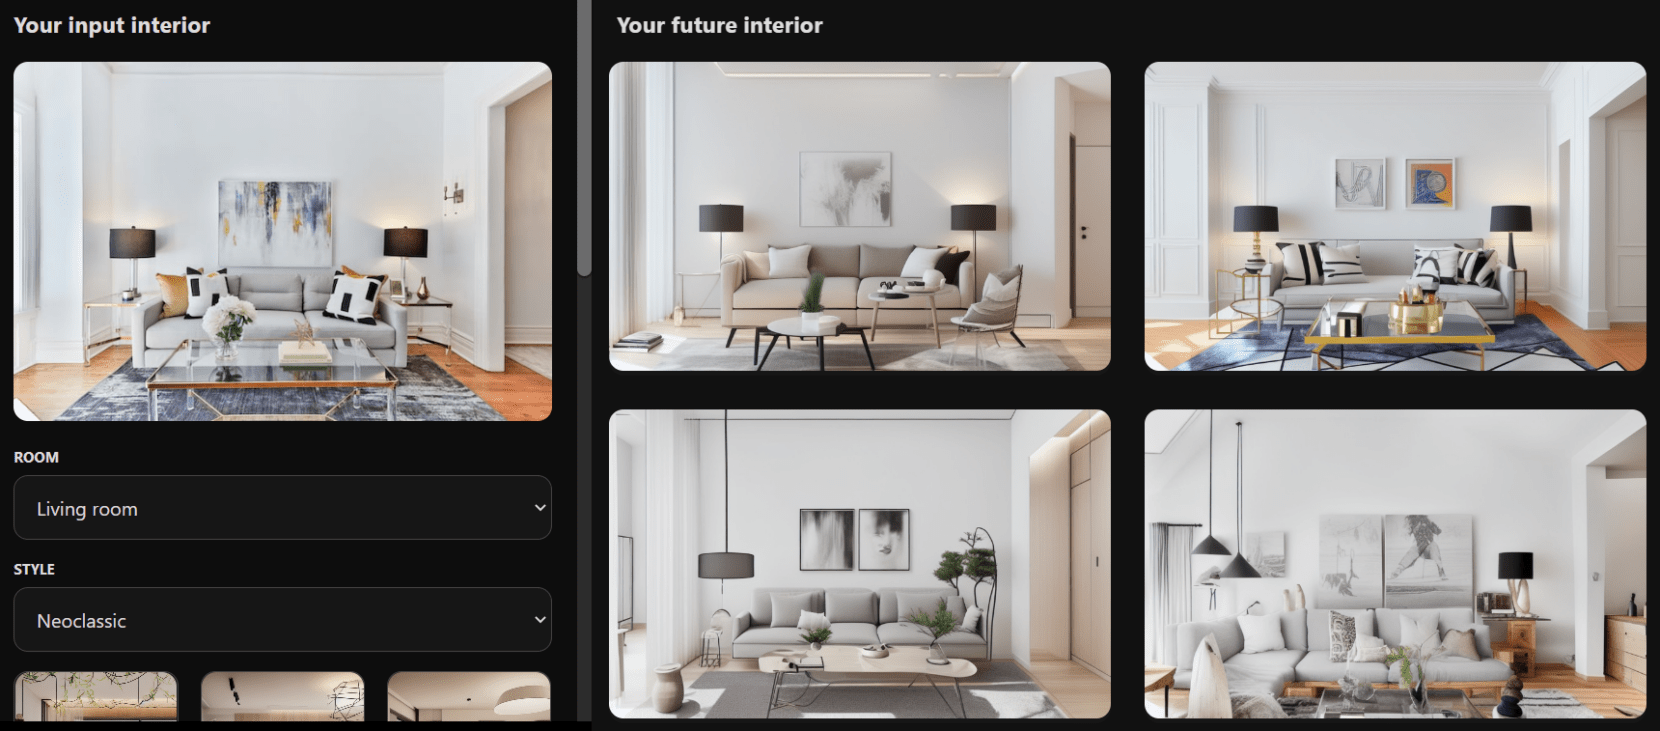 Generate AI Interior Design Ideas For Home